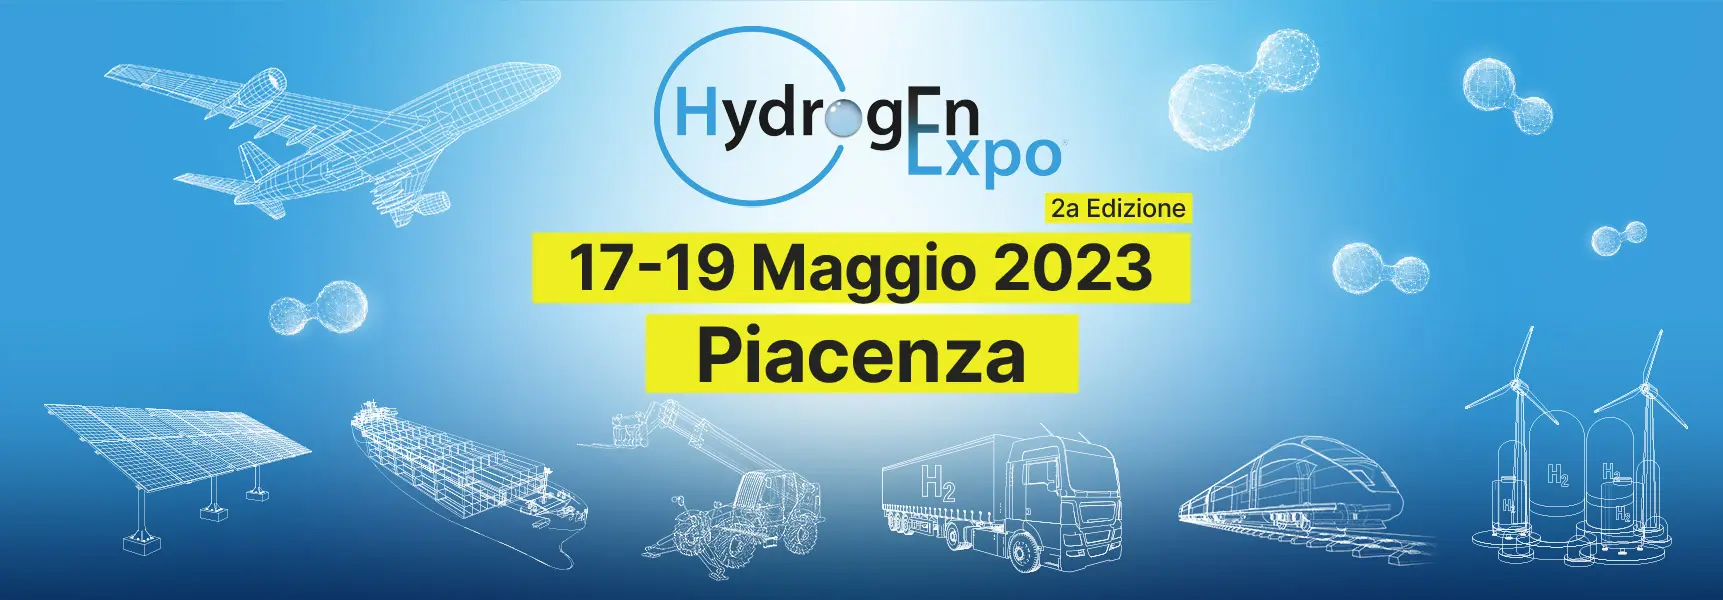 Aipe patrocina Hydrogen Expo 2023 post thumbnail image